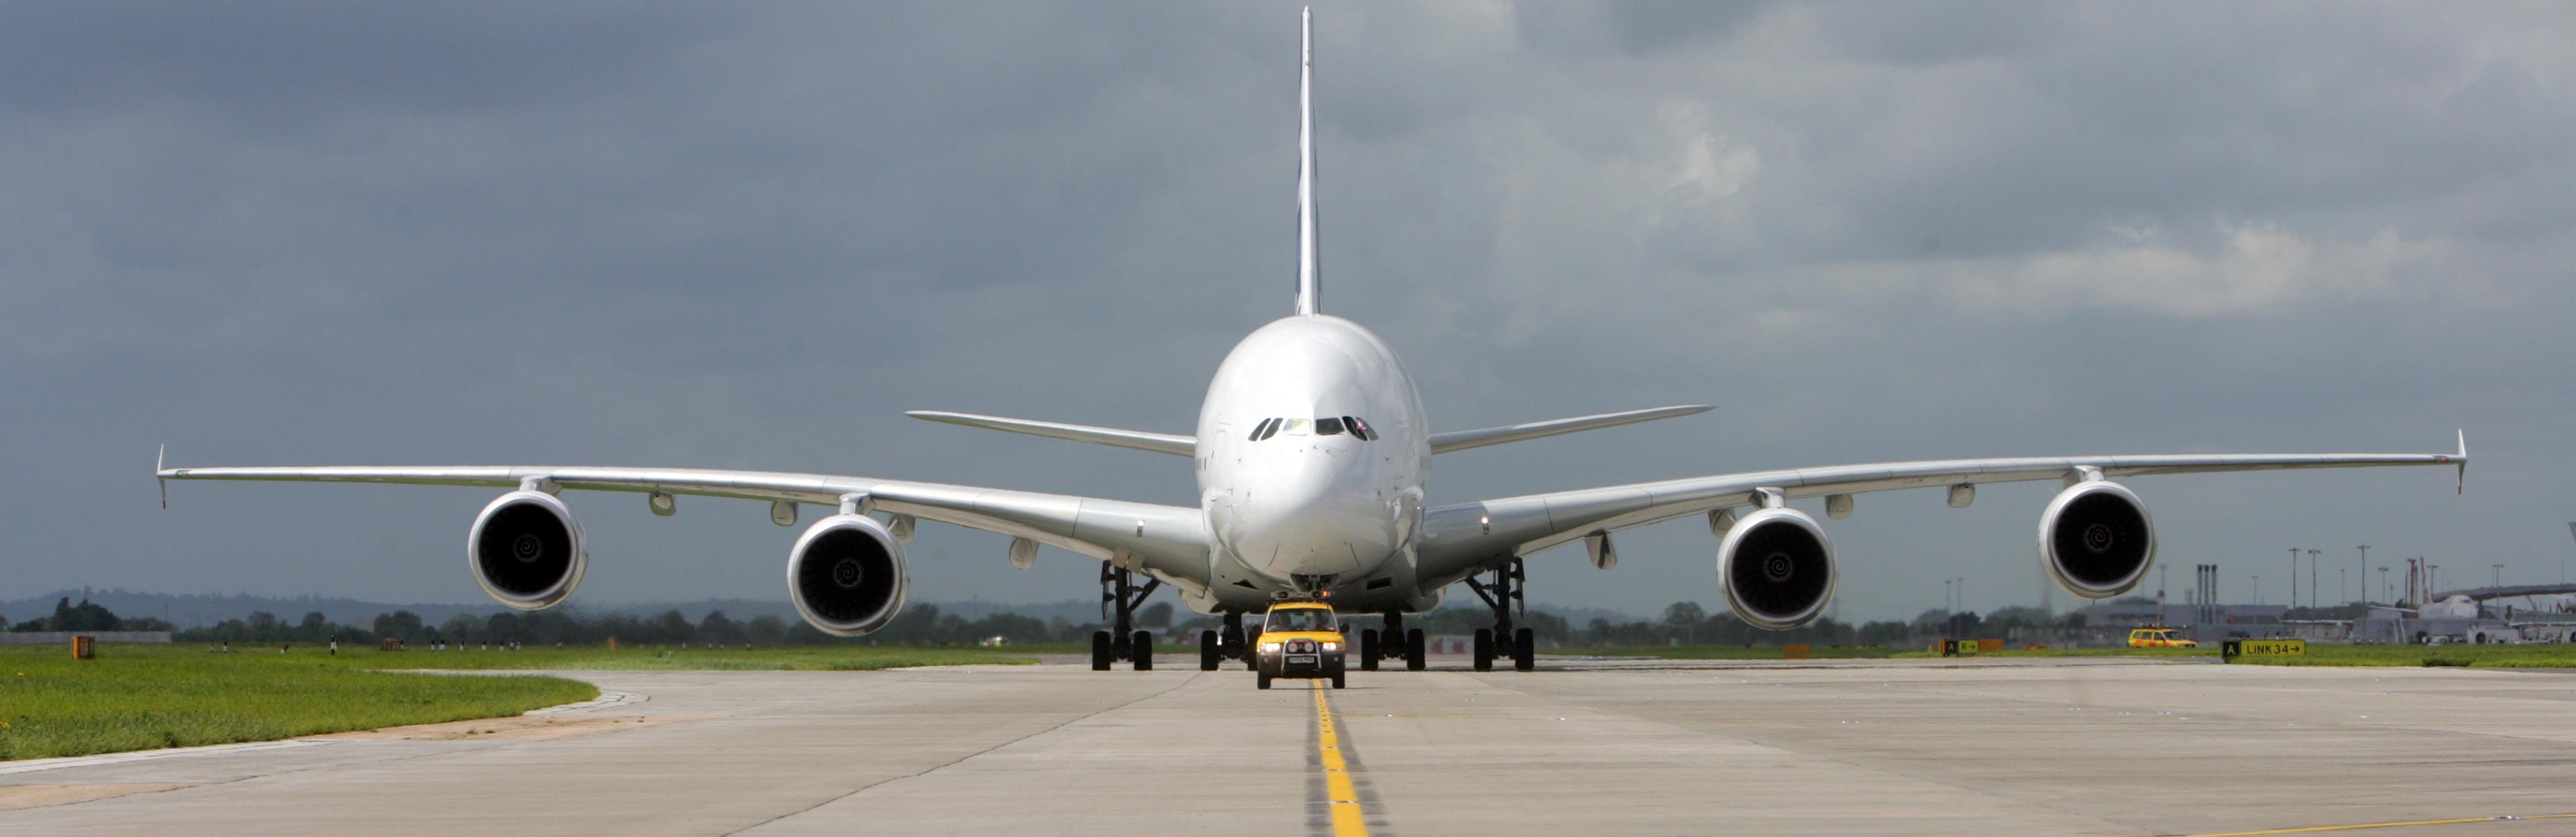 Airbus A380, Plane spotting, Heathrow, 3840x1250 Dual Screen Desktop